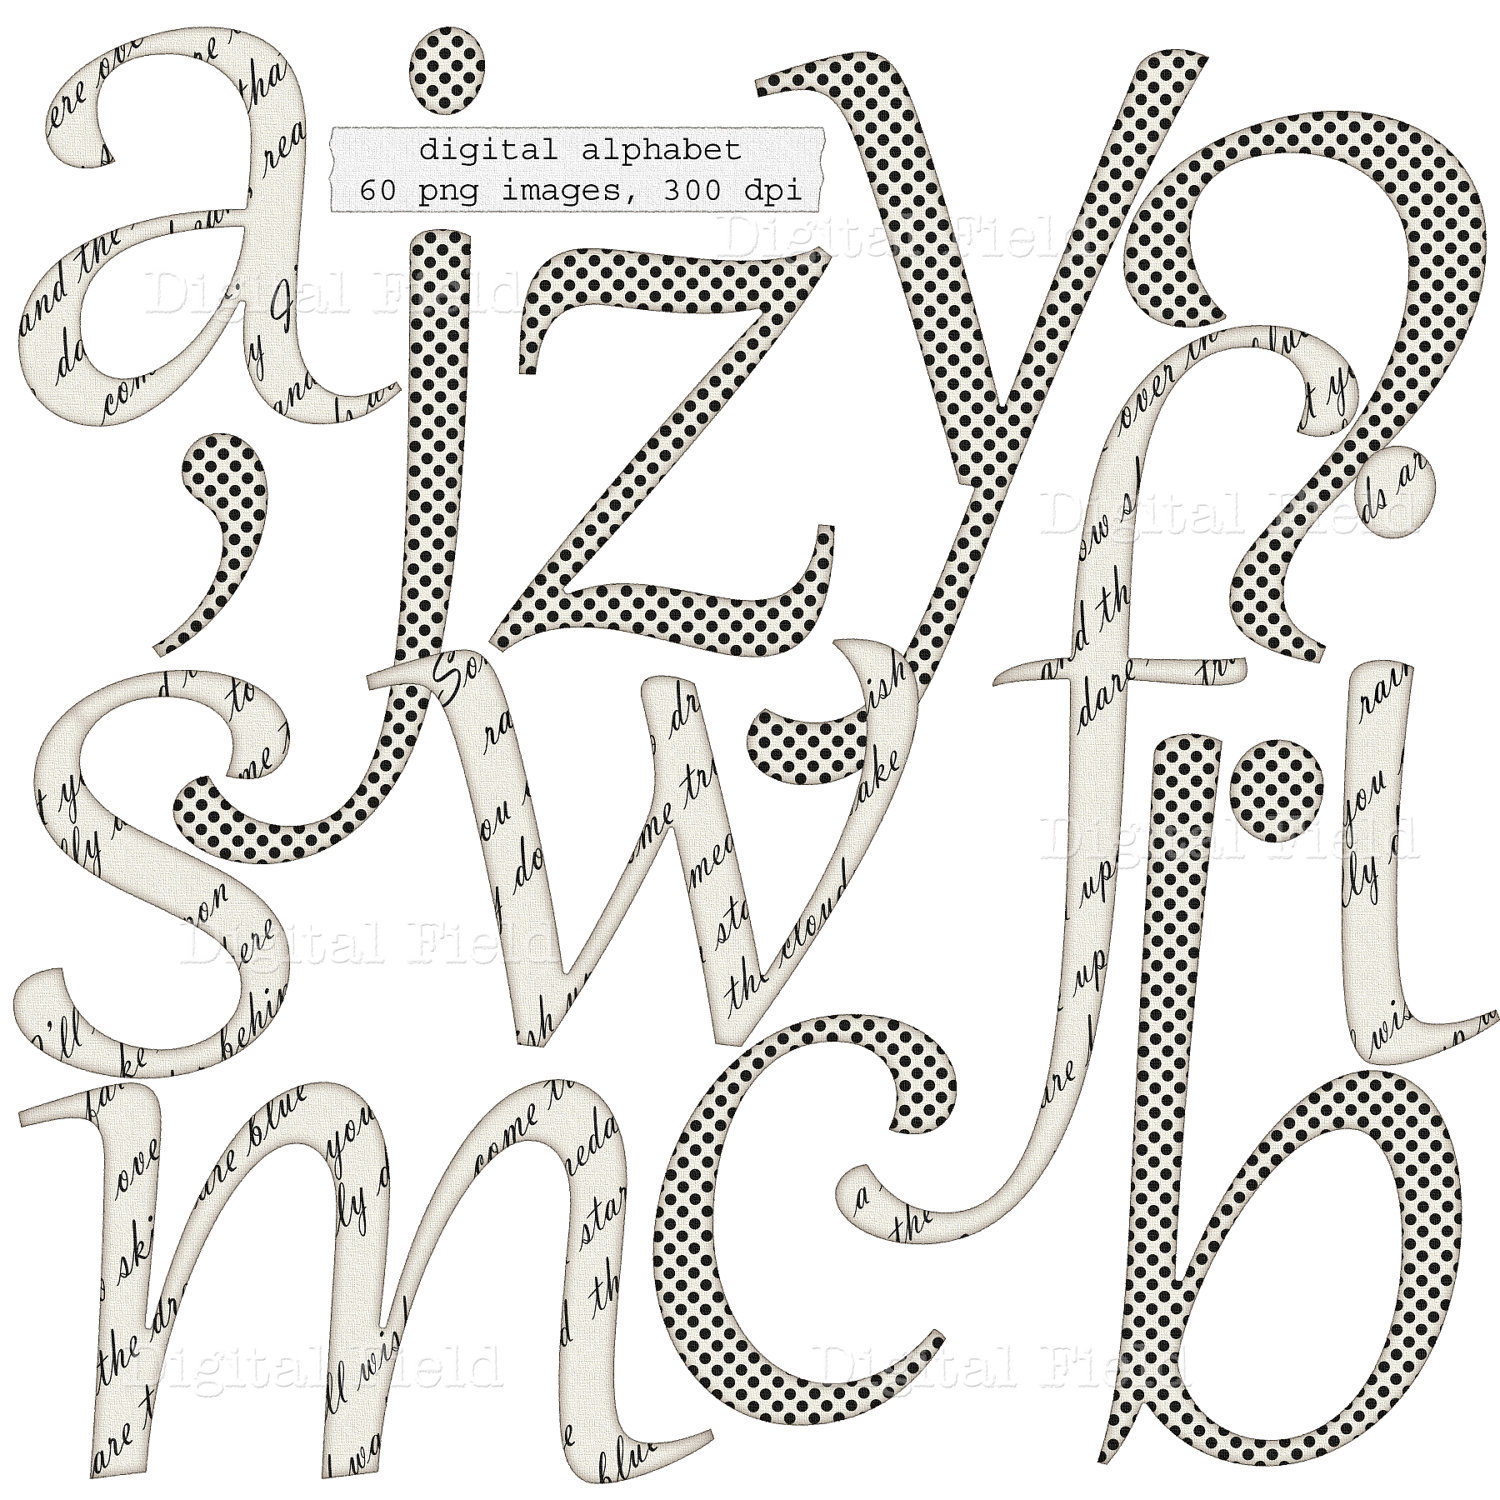 digital alphabet clip art set black and white by digitalfield